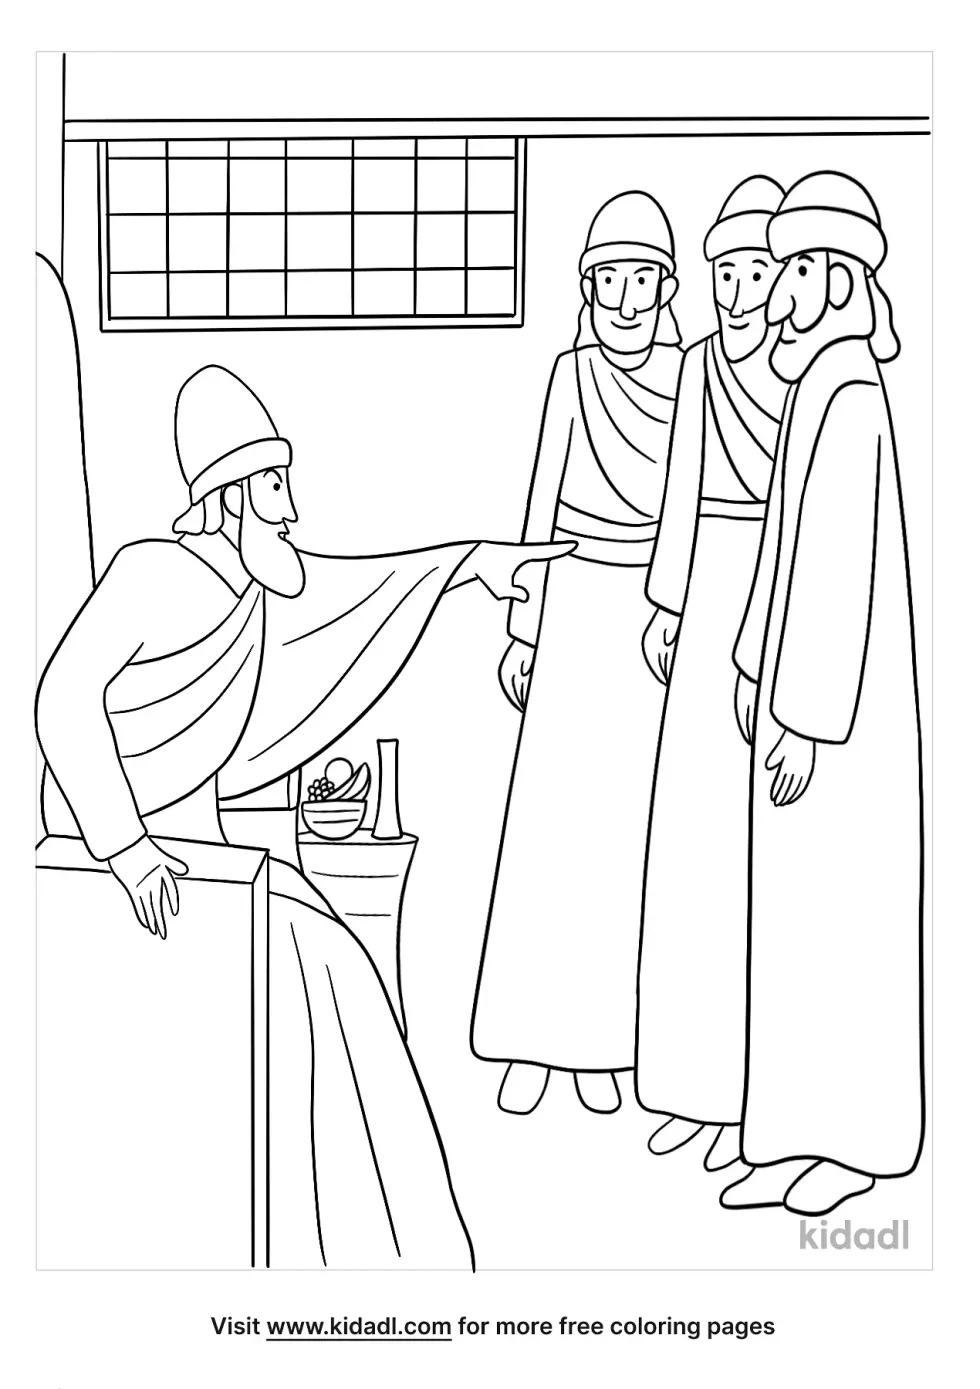 Herod Talking To The Wise Men Coloring Page | Kidadl